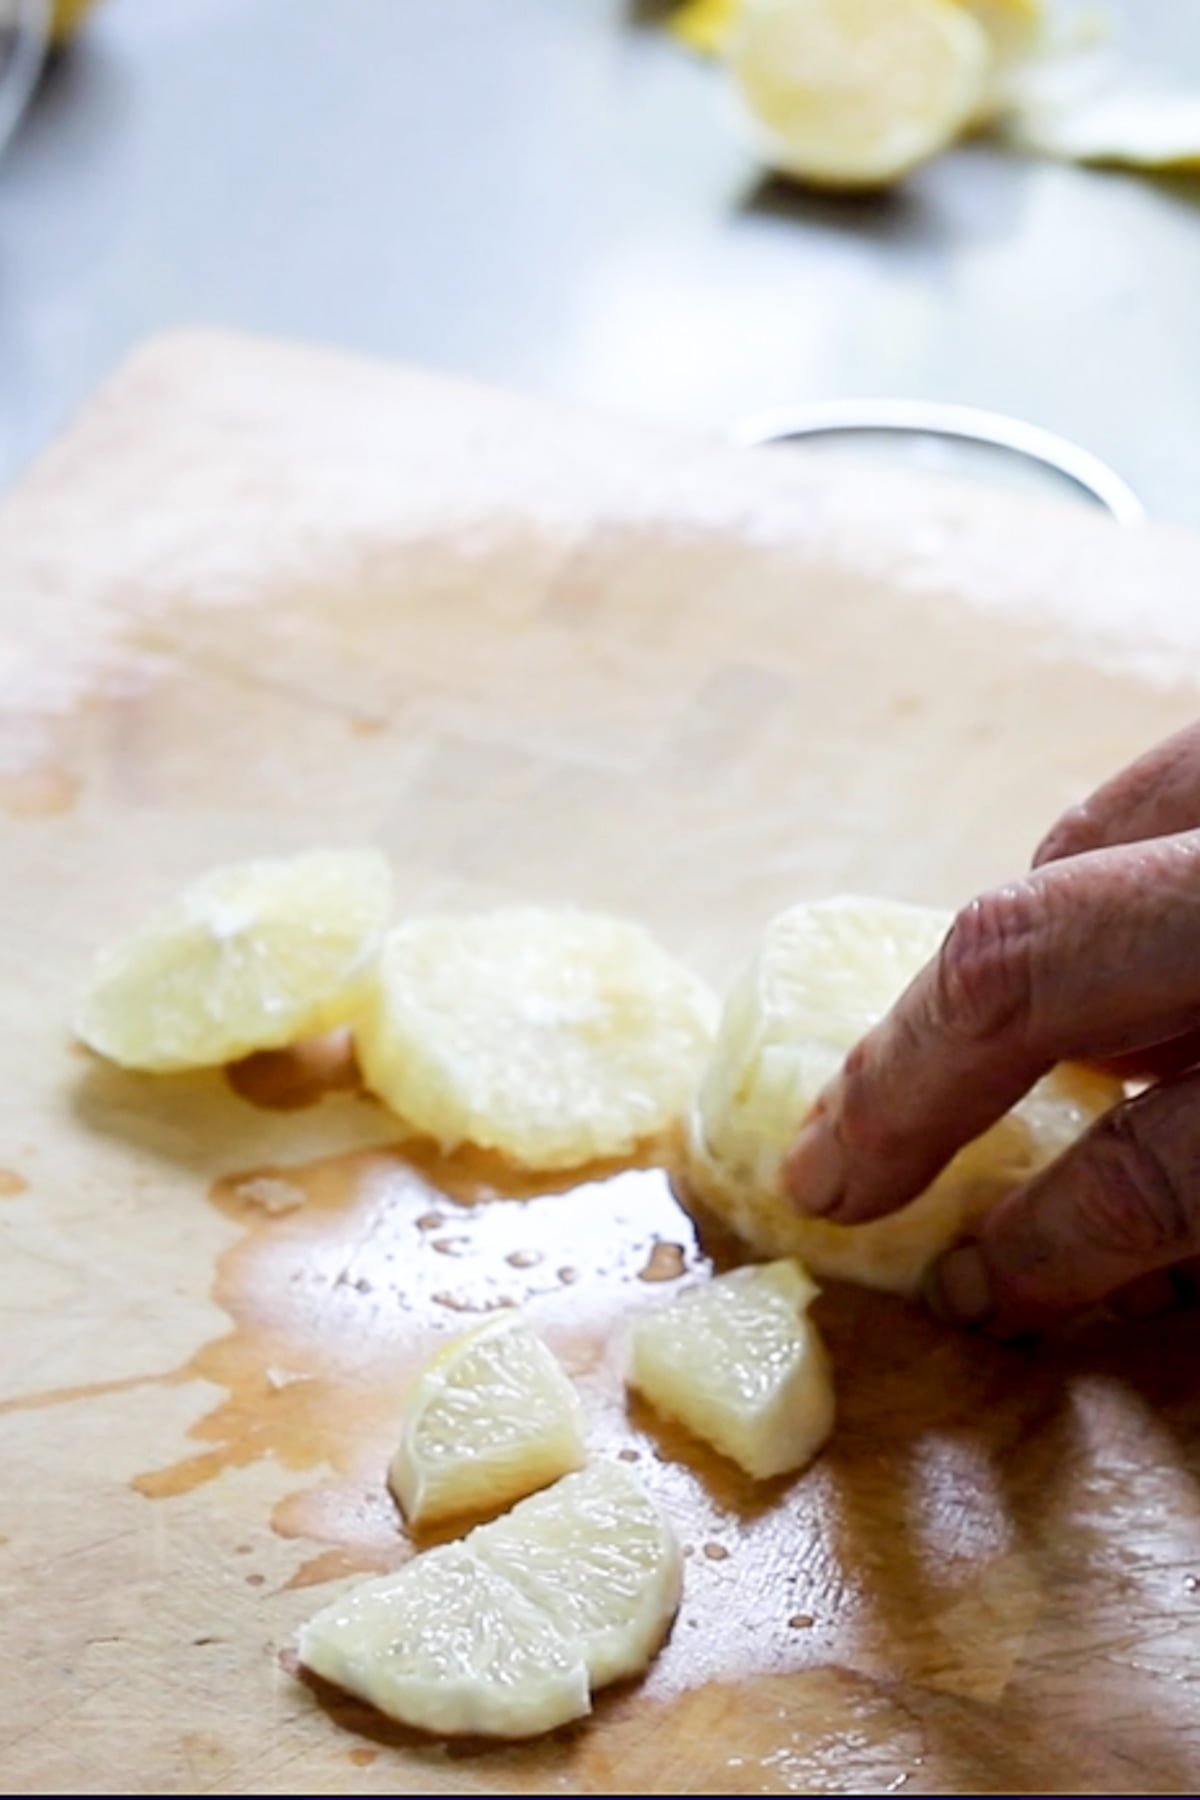 peeling and slicing the lemon